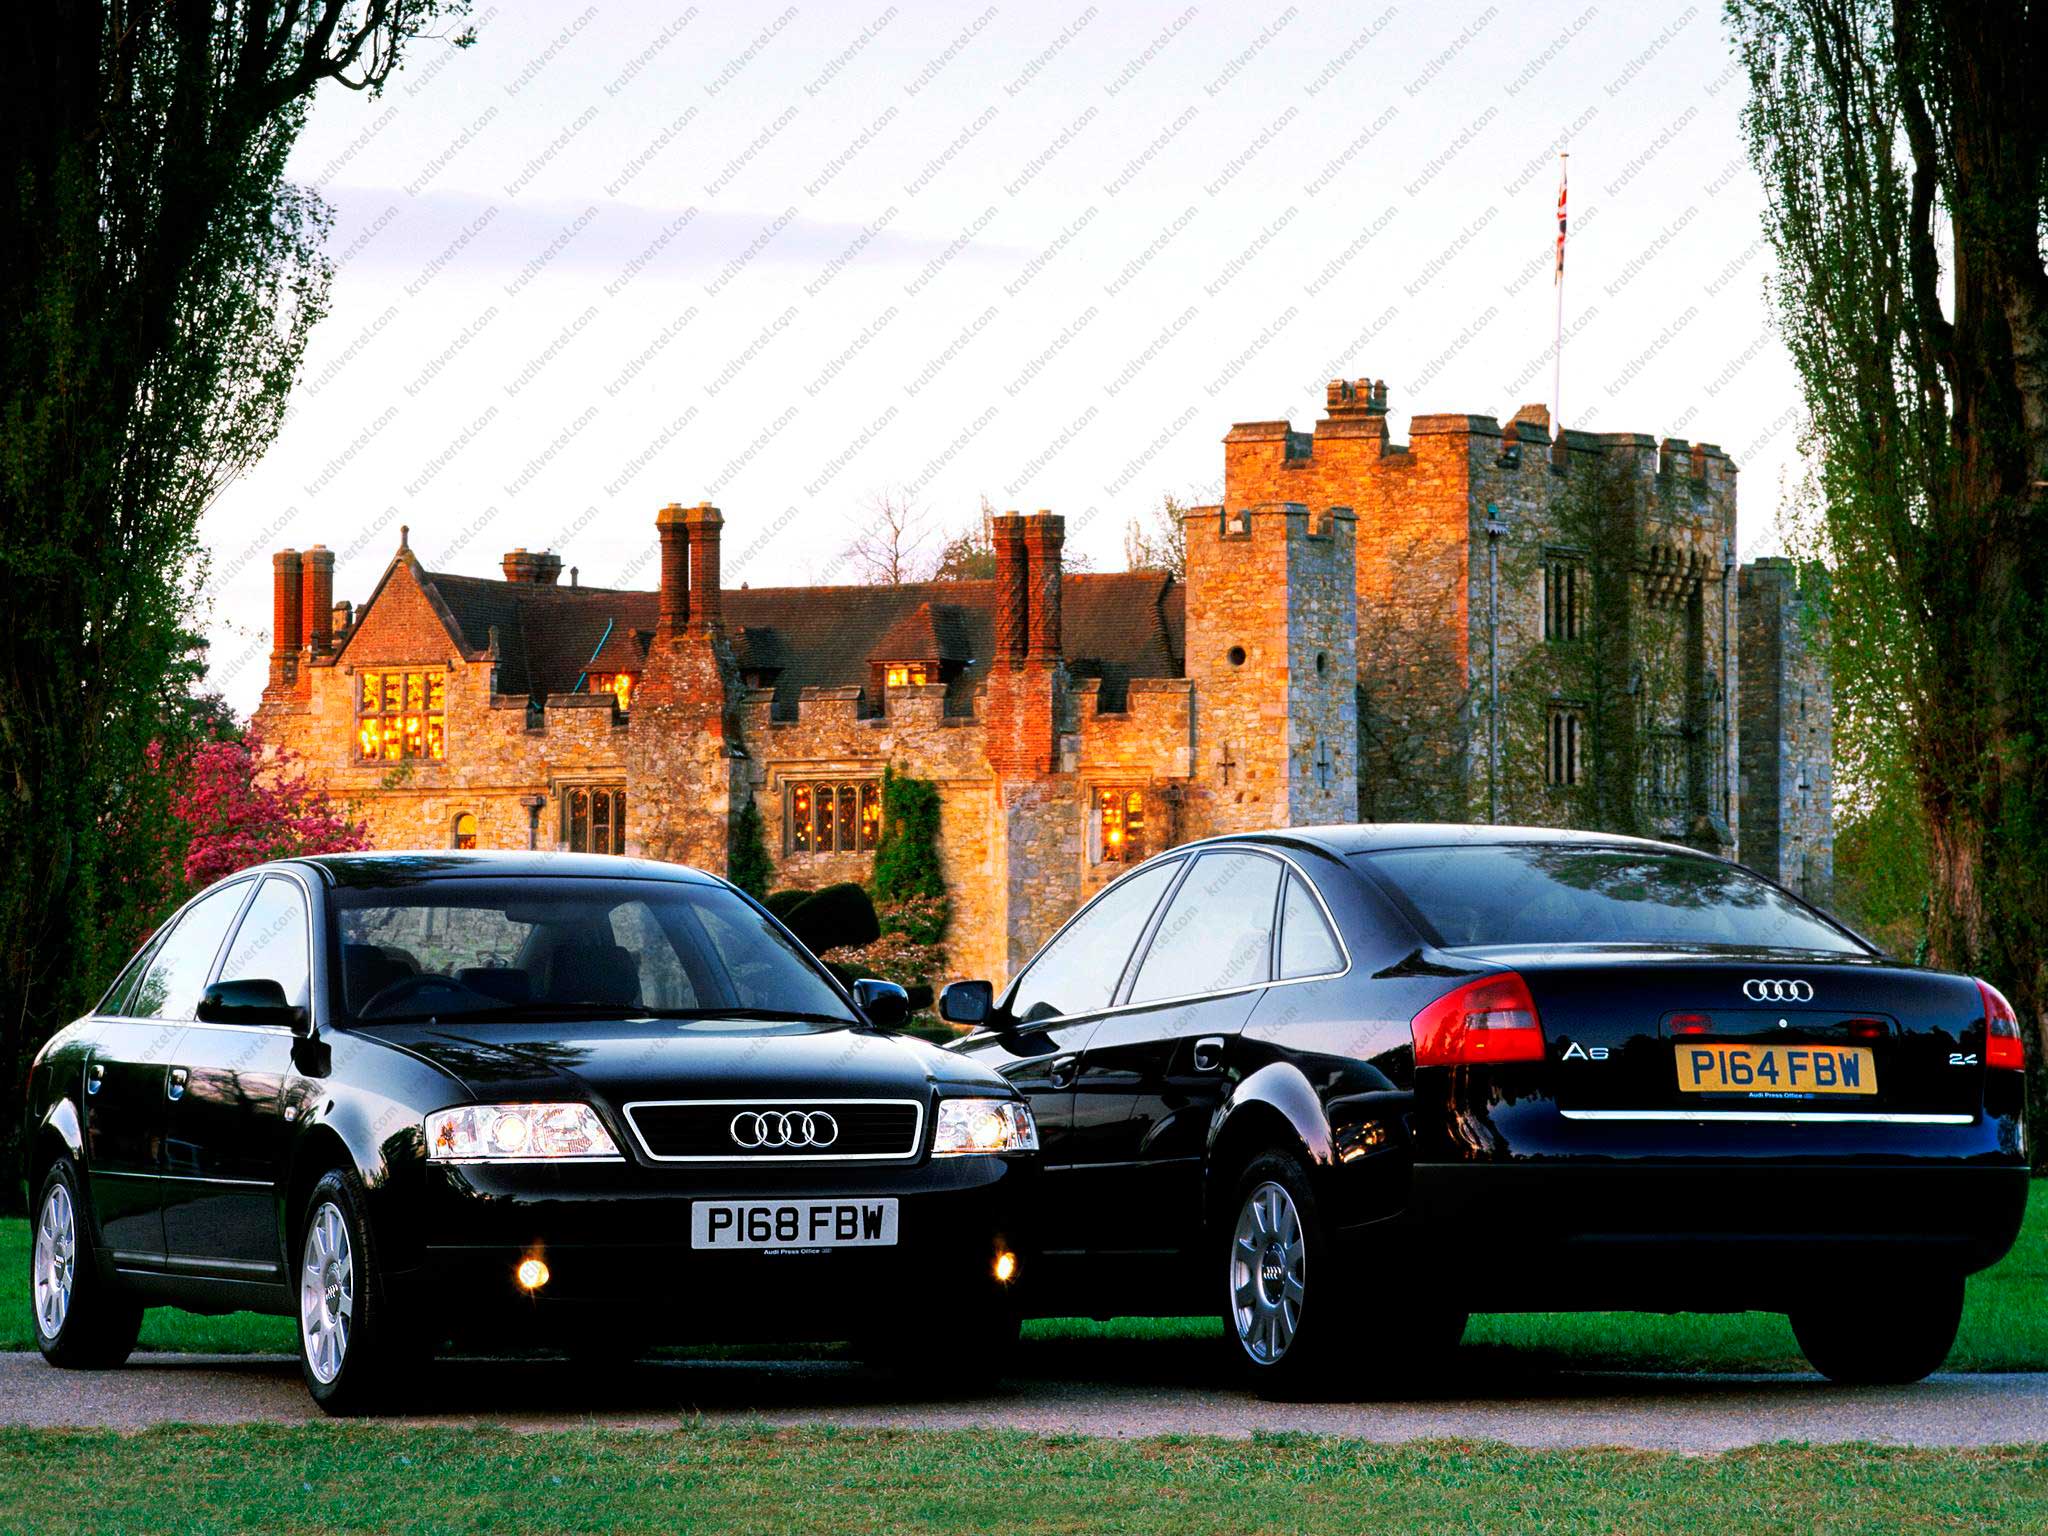 Ауди а6 с5 2001 год. Audi a6 c5 1997. Audi a6 c5. Audi a6 c5 седан. Audi a6 c5 2001.